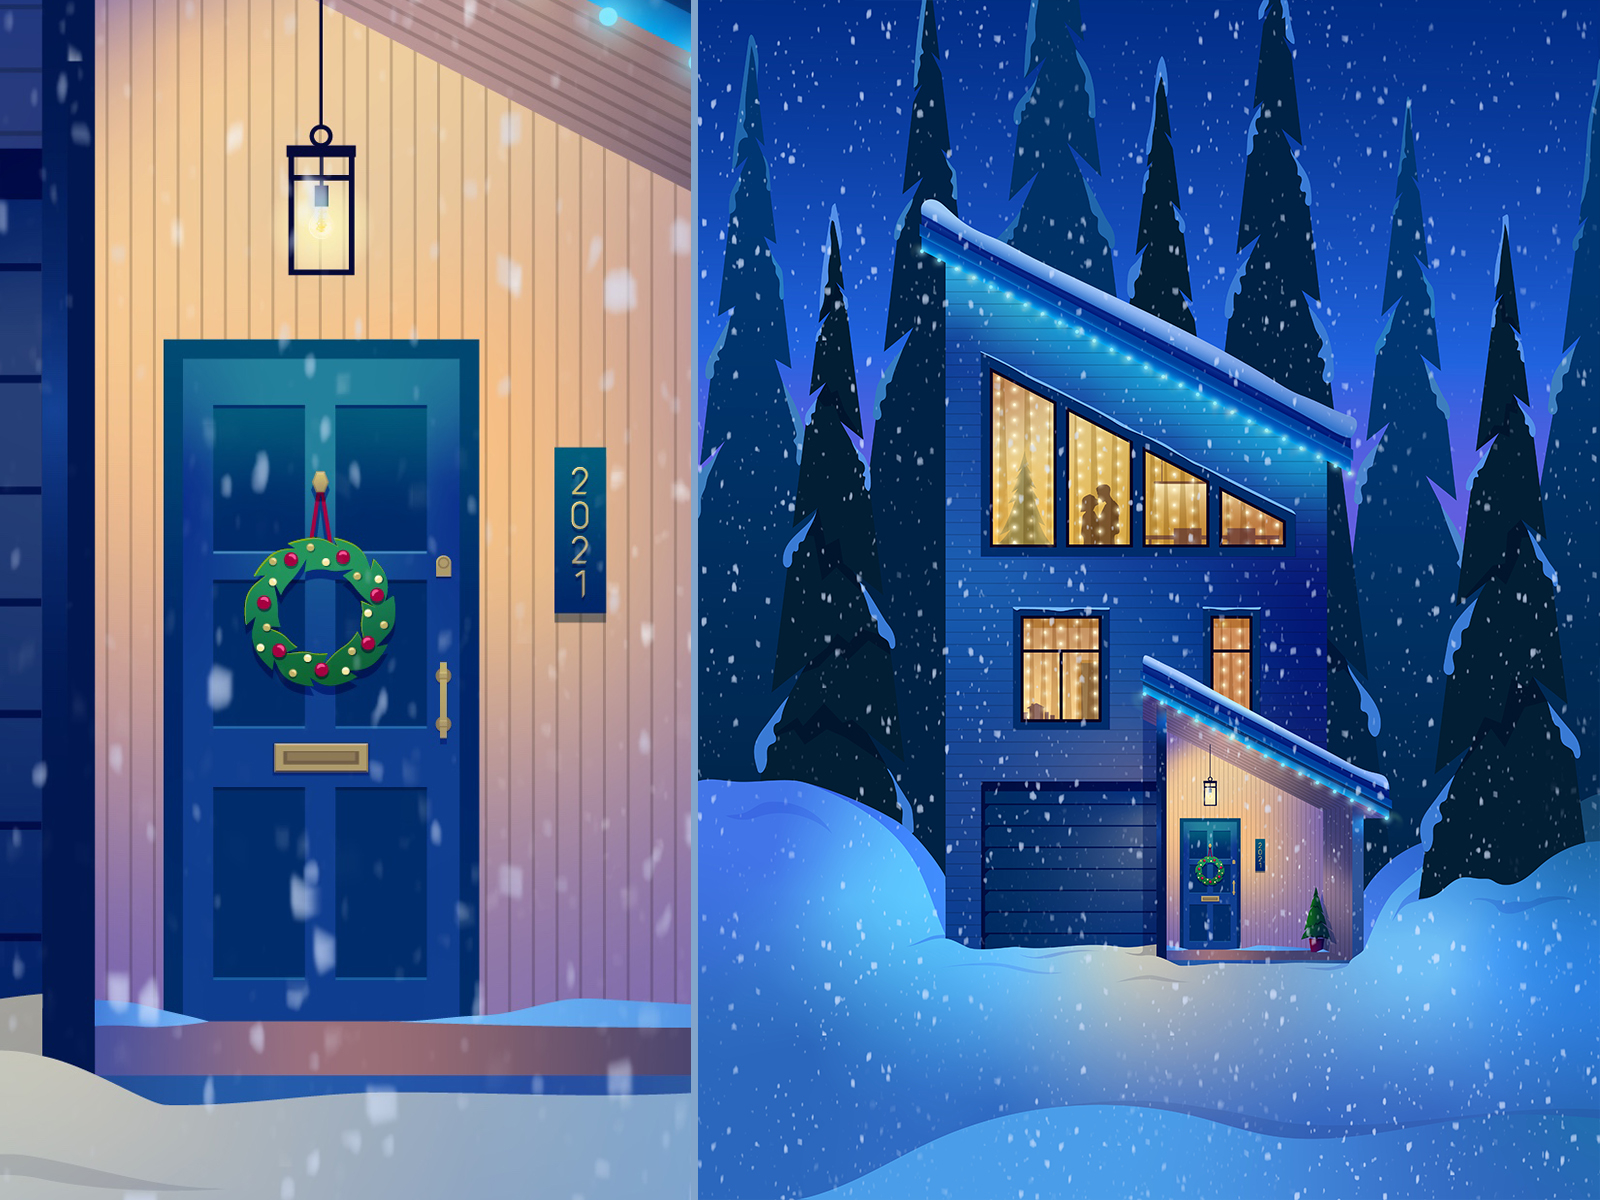 Winter house 2021 christmas house illustration new year snow vector illustration winter